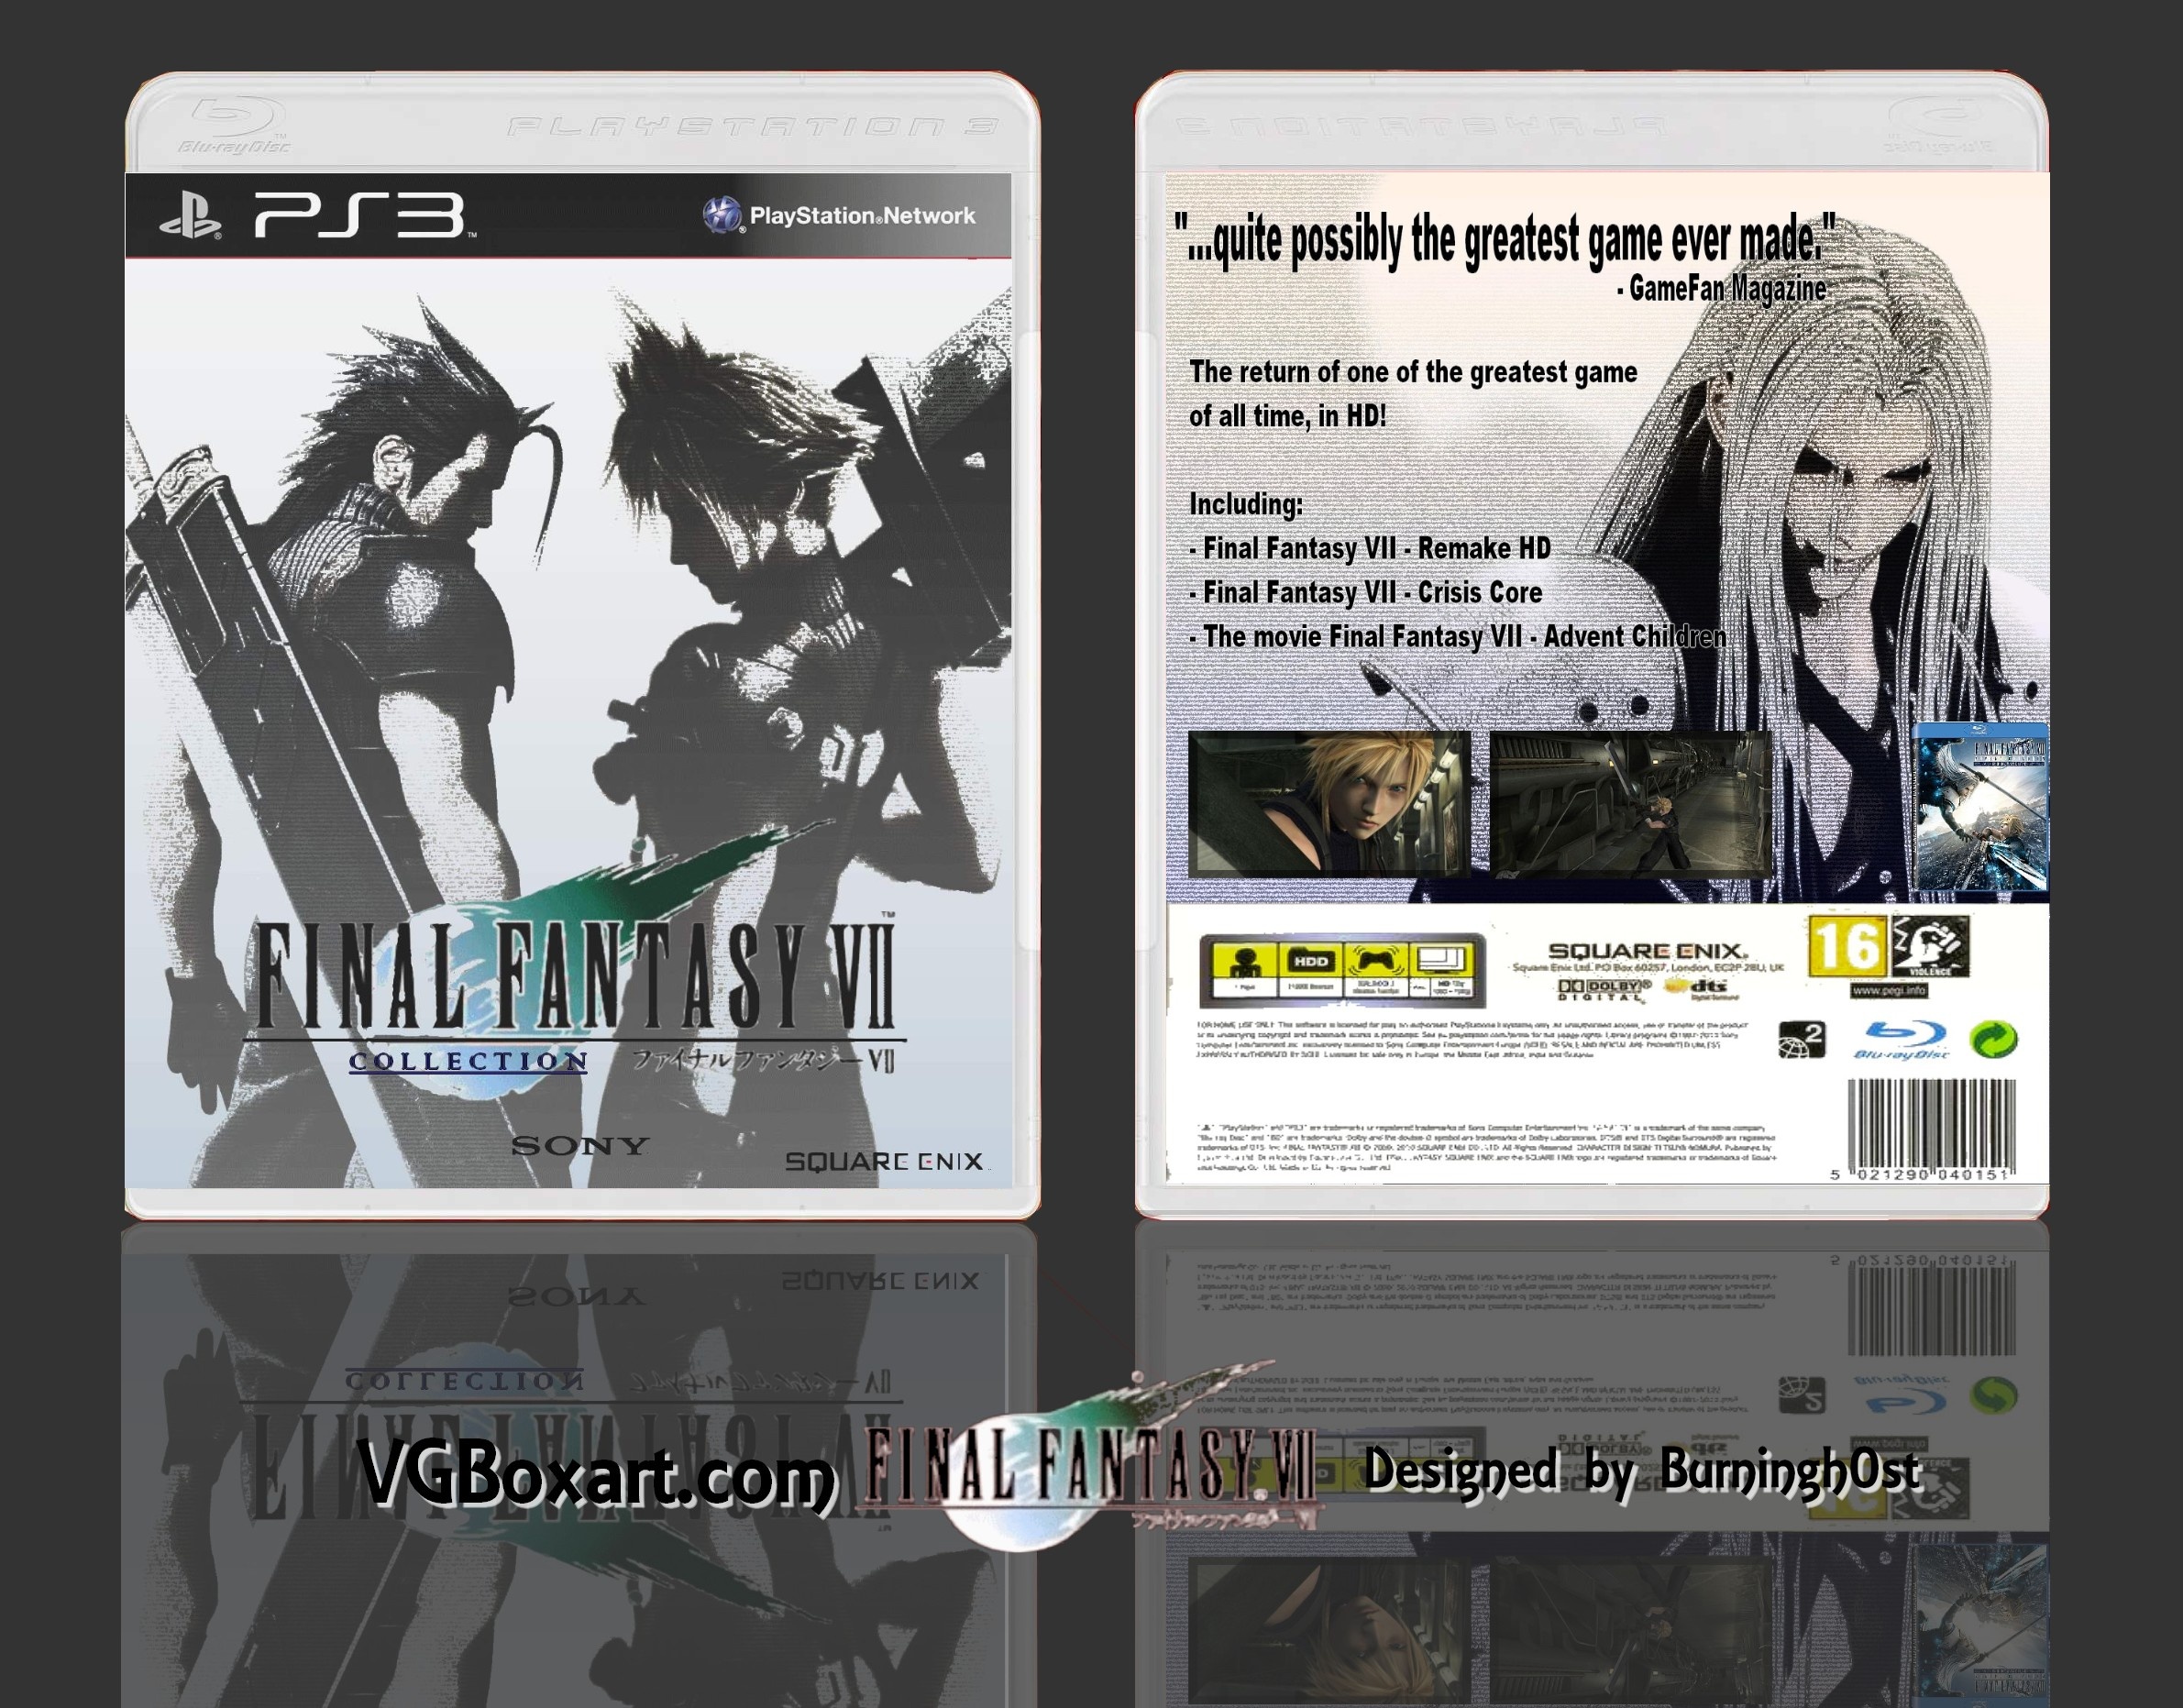 Final Fantasy VII Collection box cover